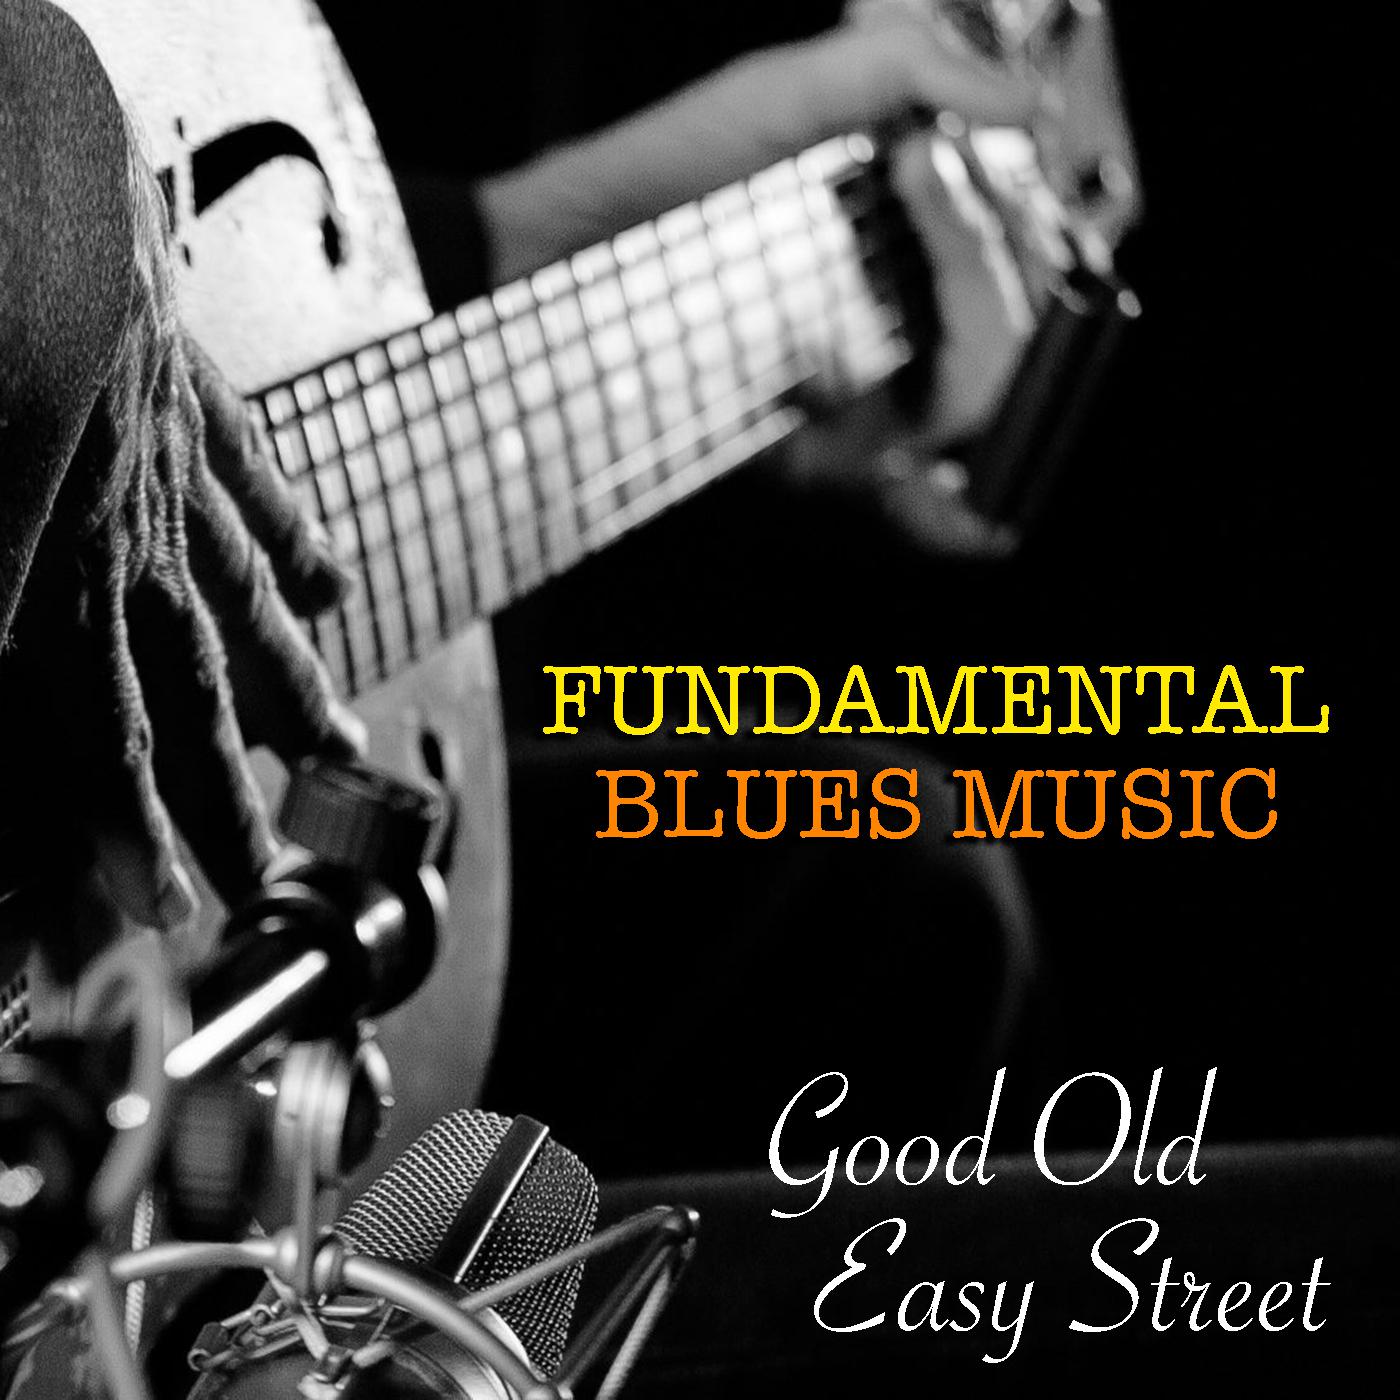 Good Old Easy Street Fundamental Blues Music